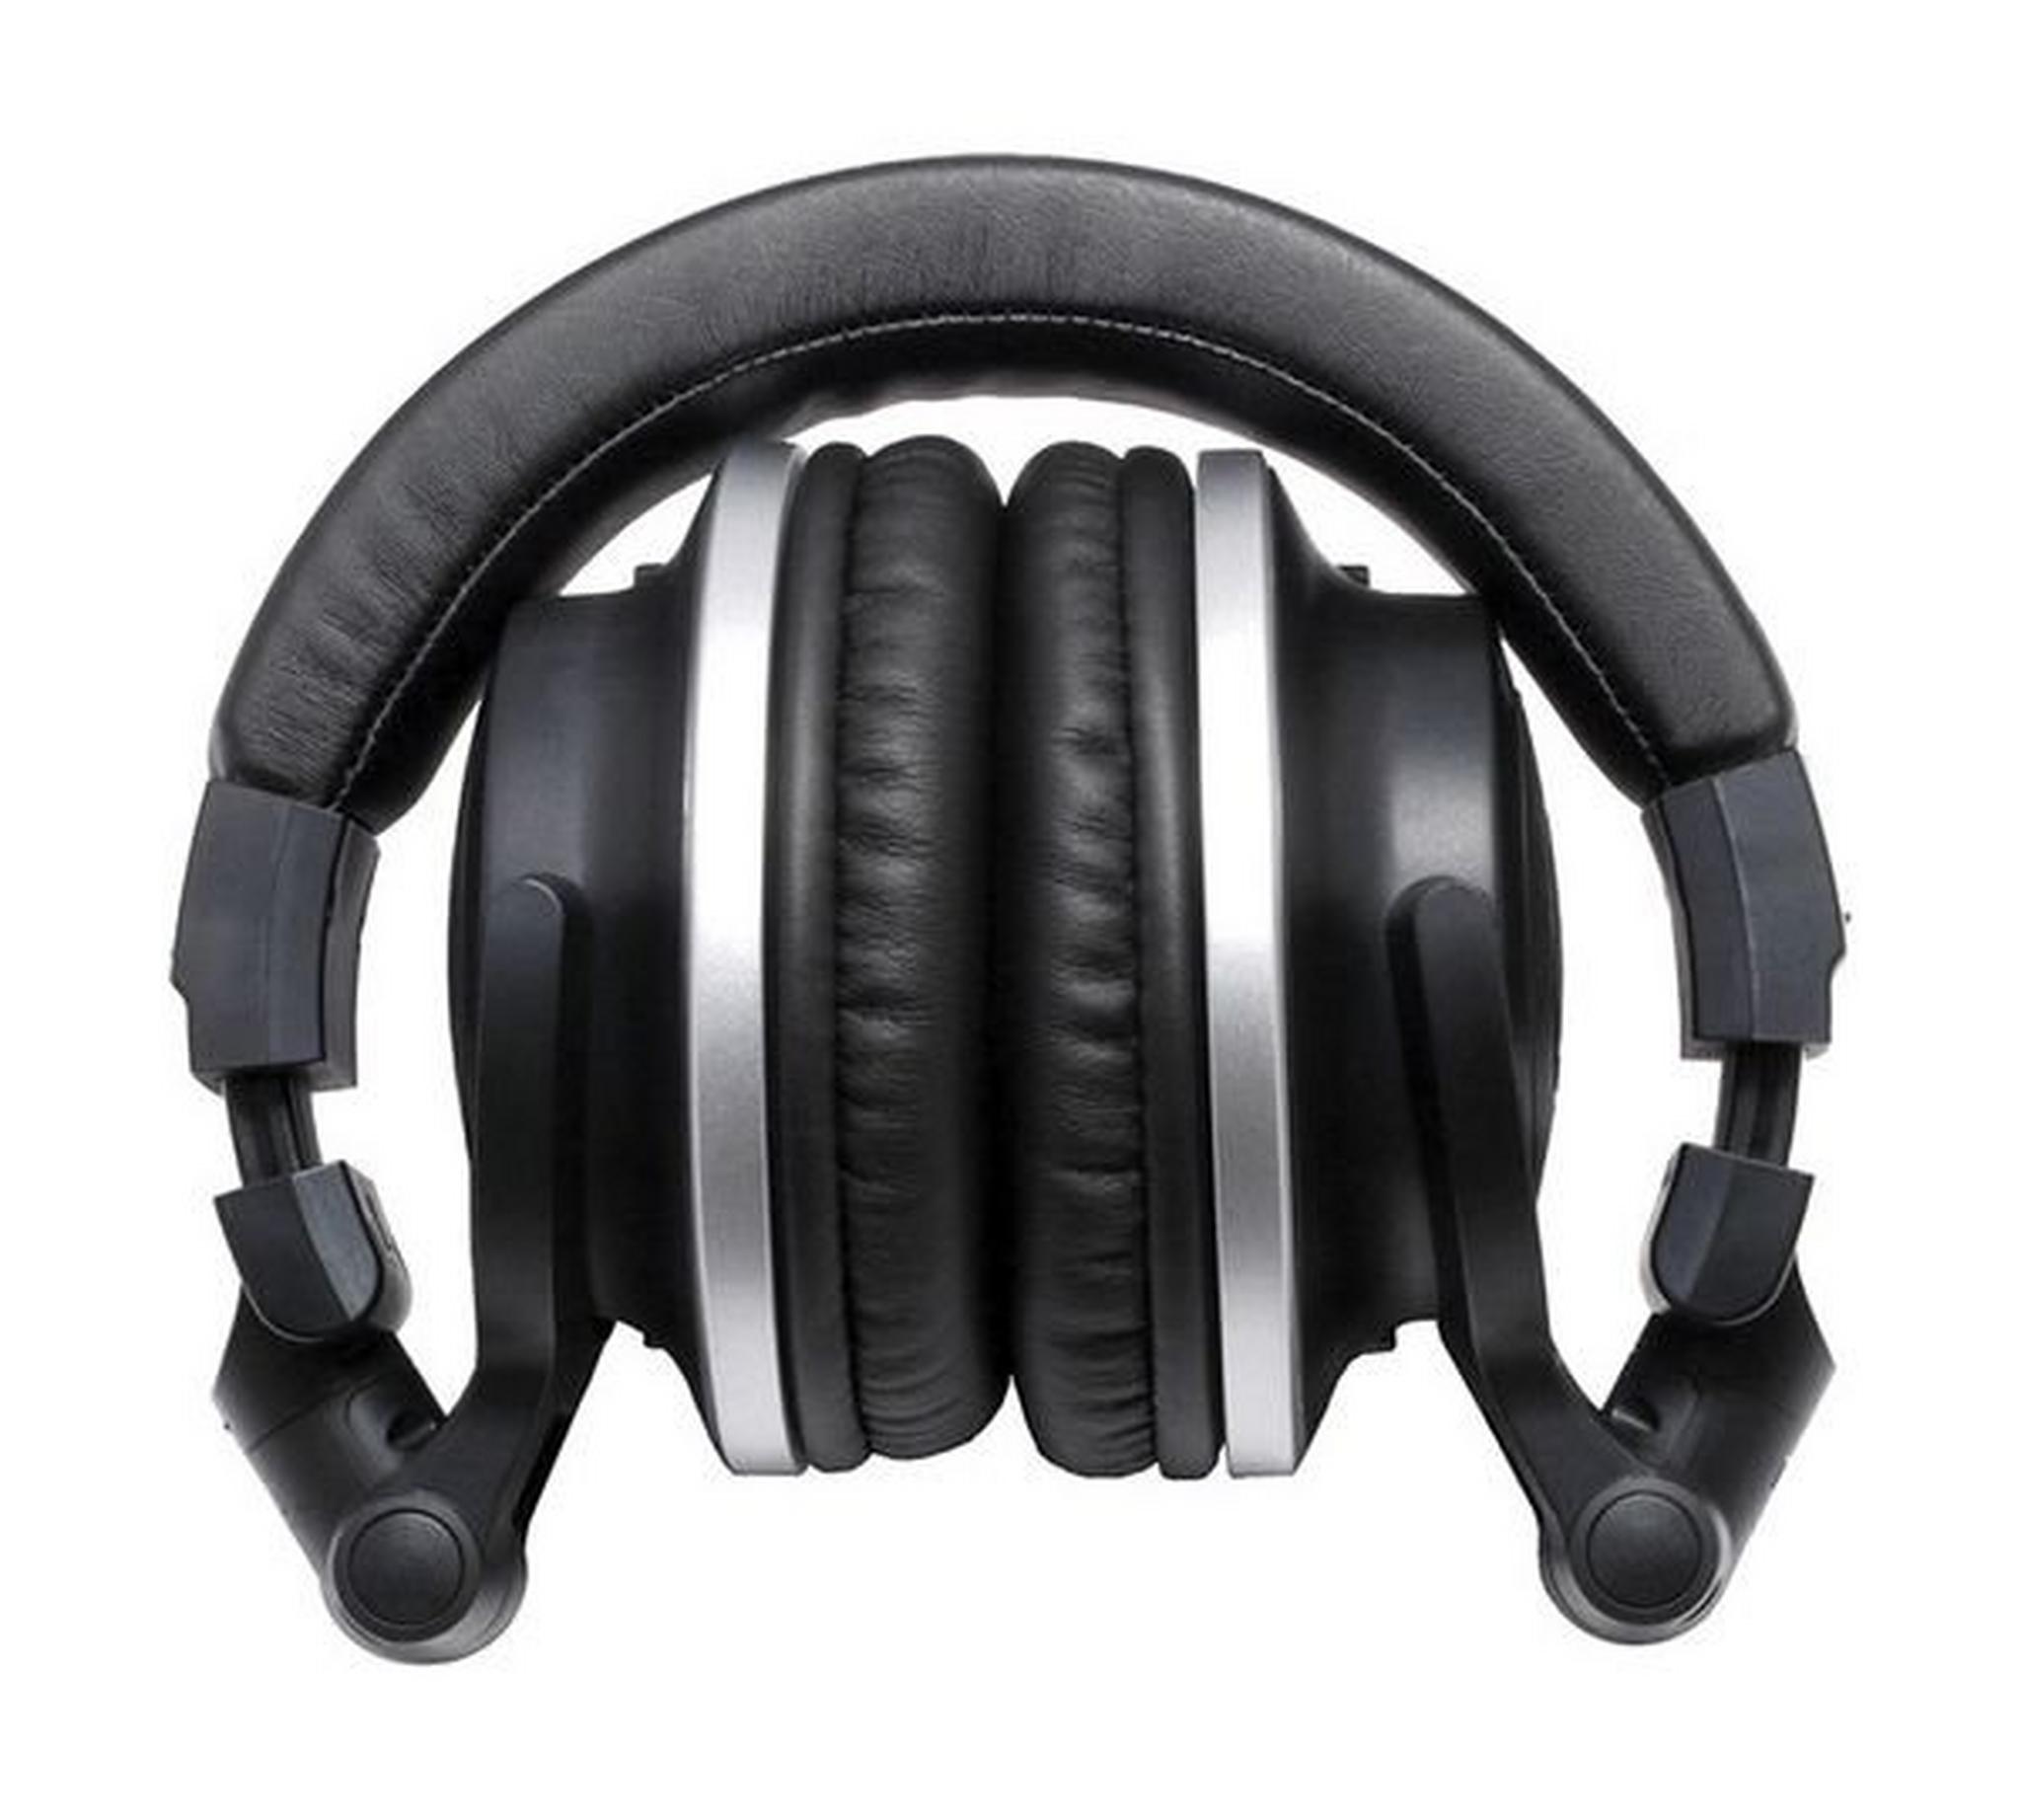 Audio-Technica ATH-PRO500MK2BK Professional DJ Monitor Wireless Headphones - Black